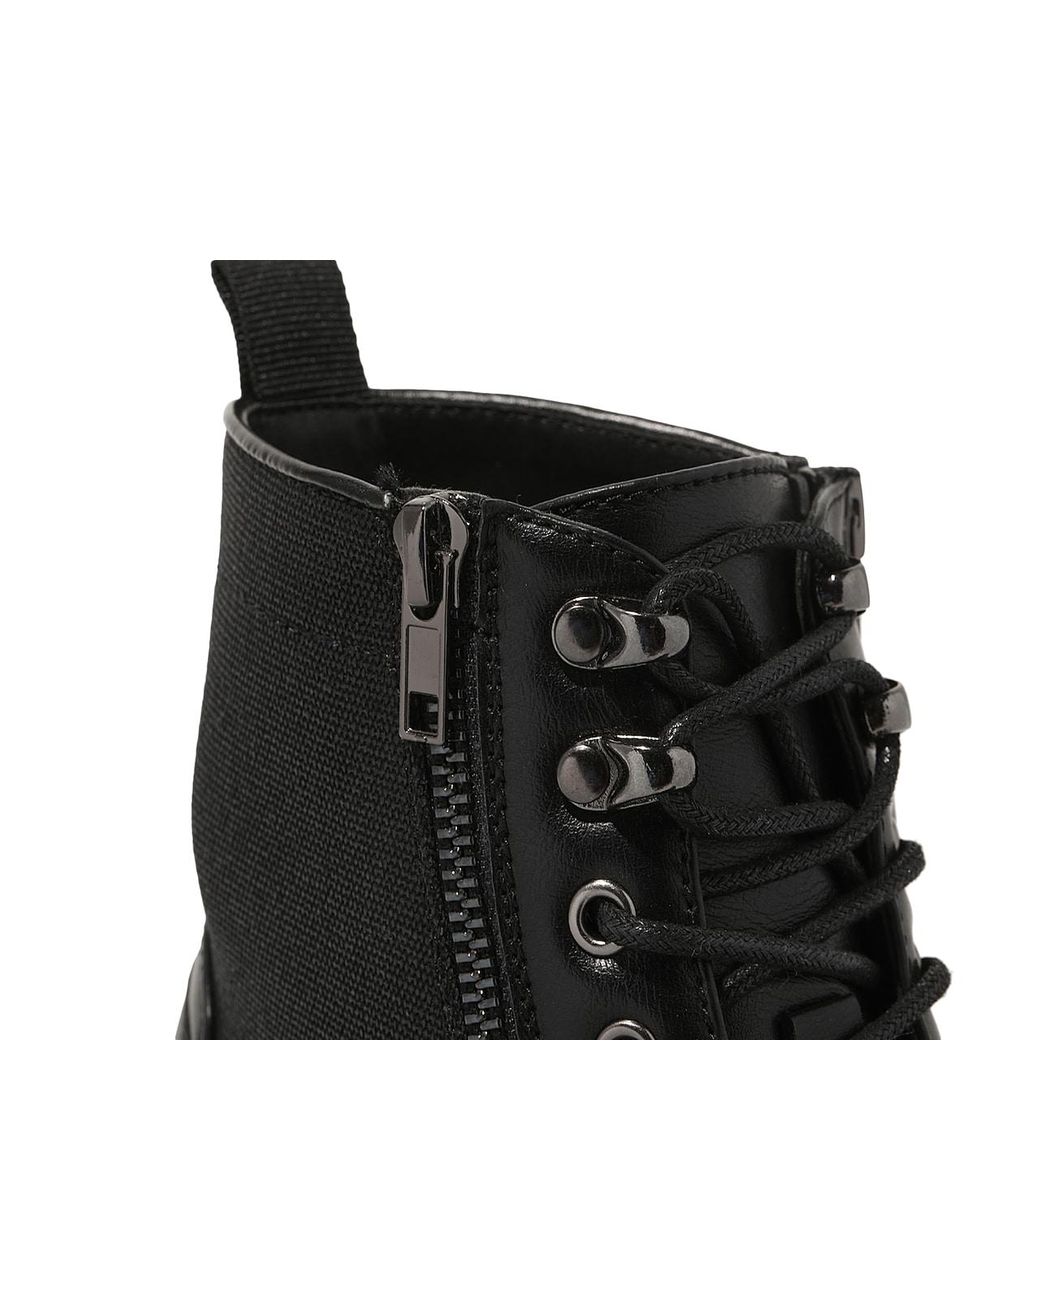 Steve Madden black leather Latch heels combat boots size 8 | Heeled combat  boots, Black leather, Combat boots